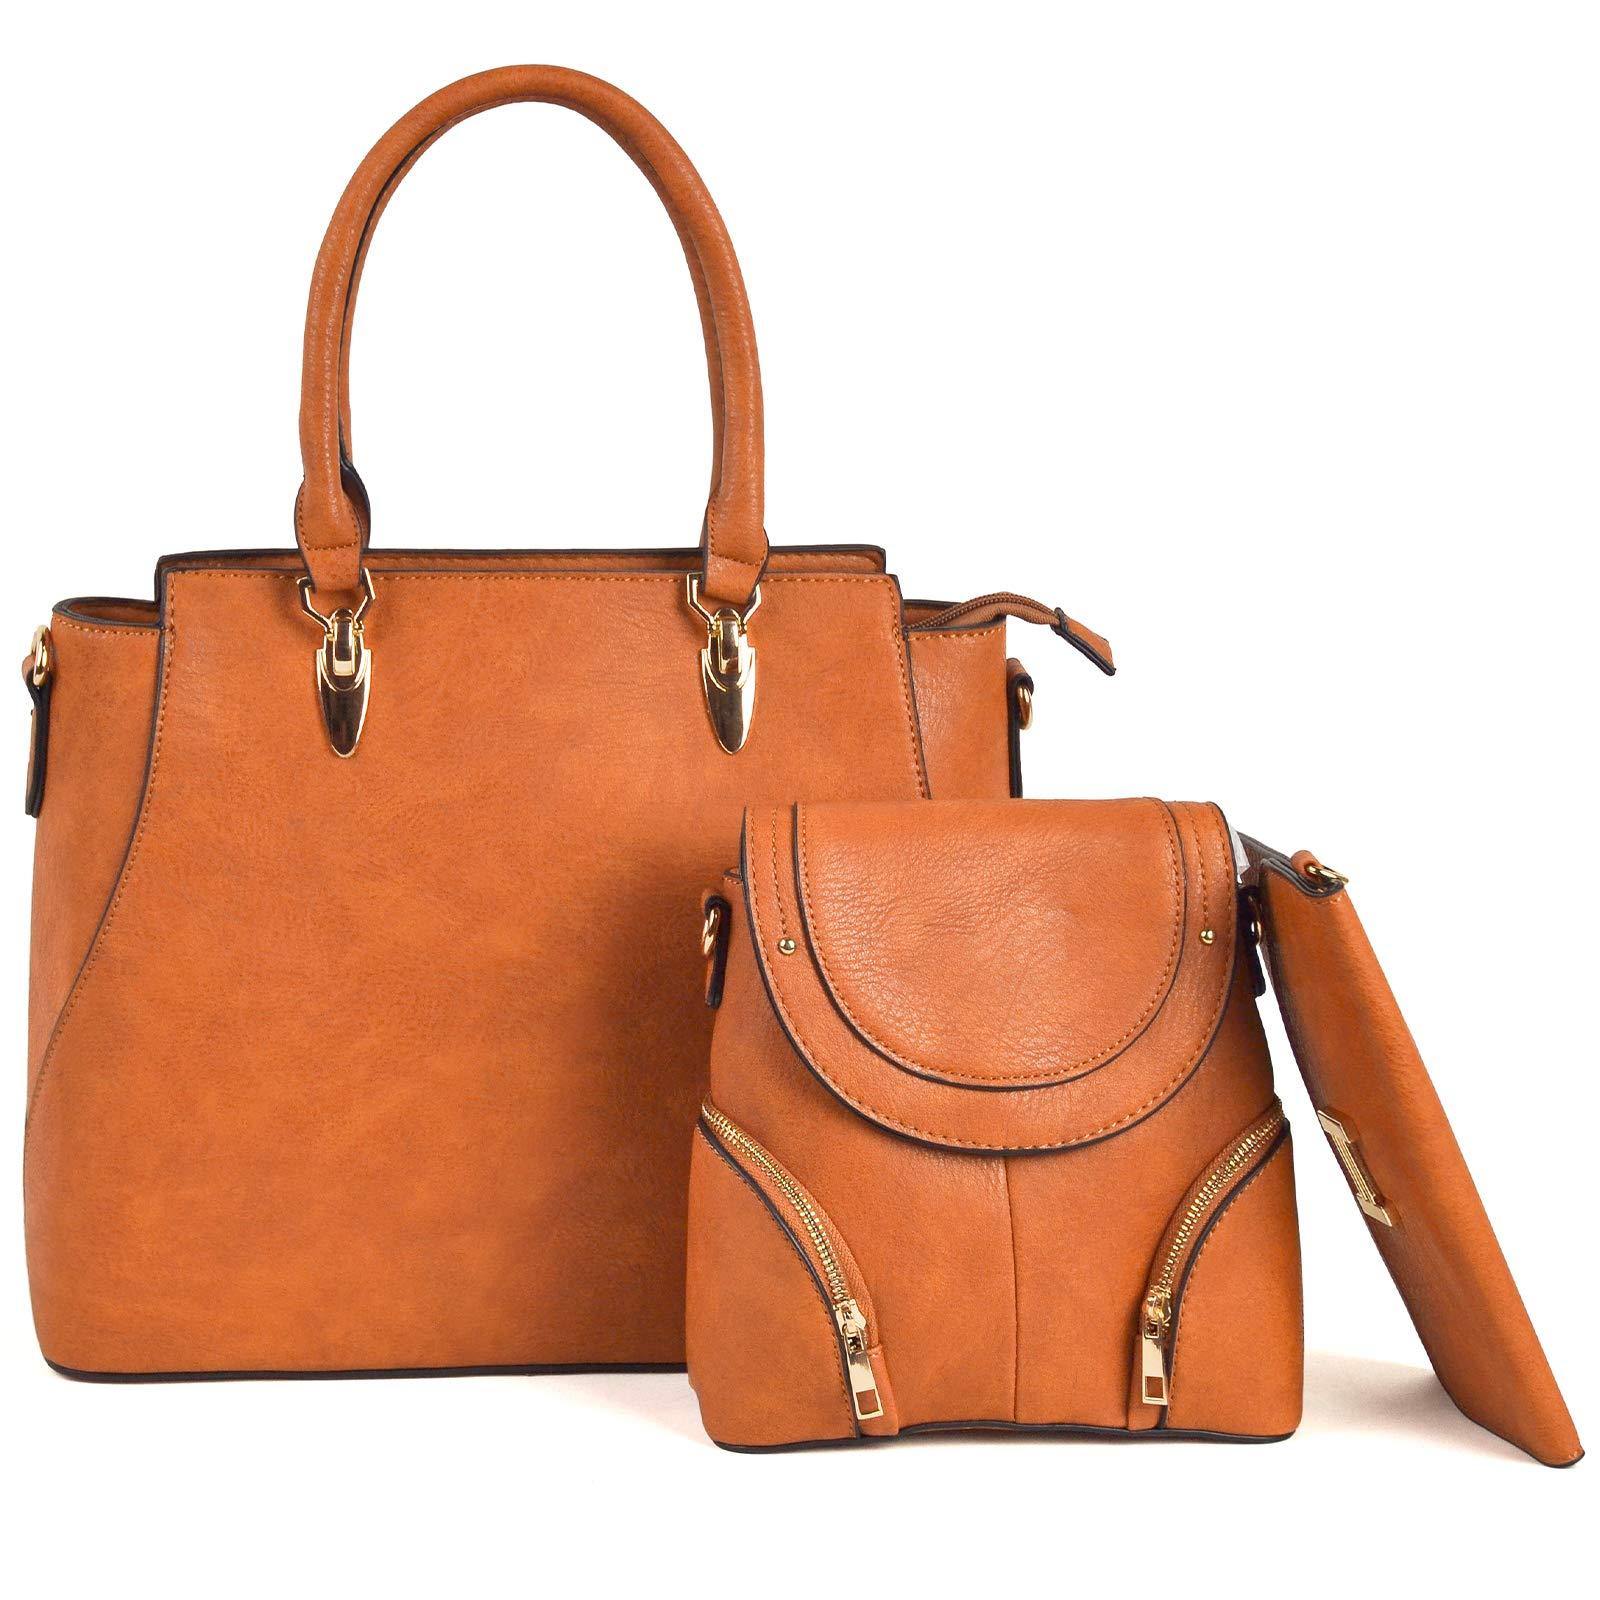 Orange Textured Faux Leather Satchel Purse - Handbags, Bling & More!